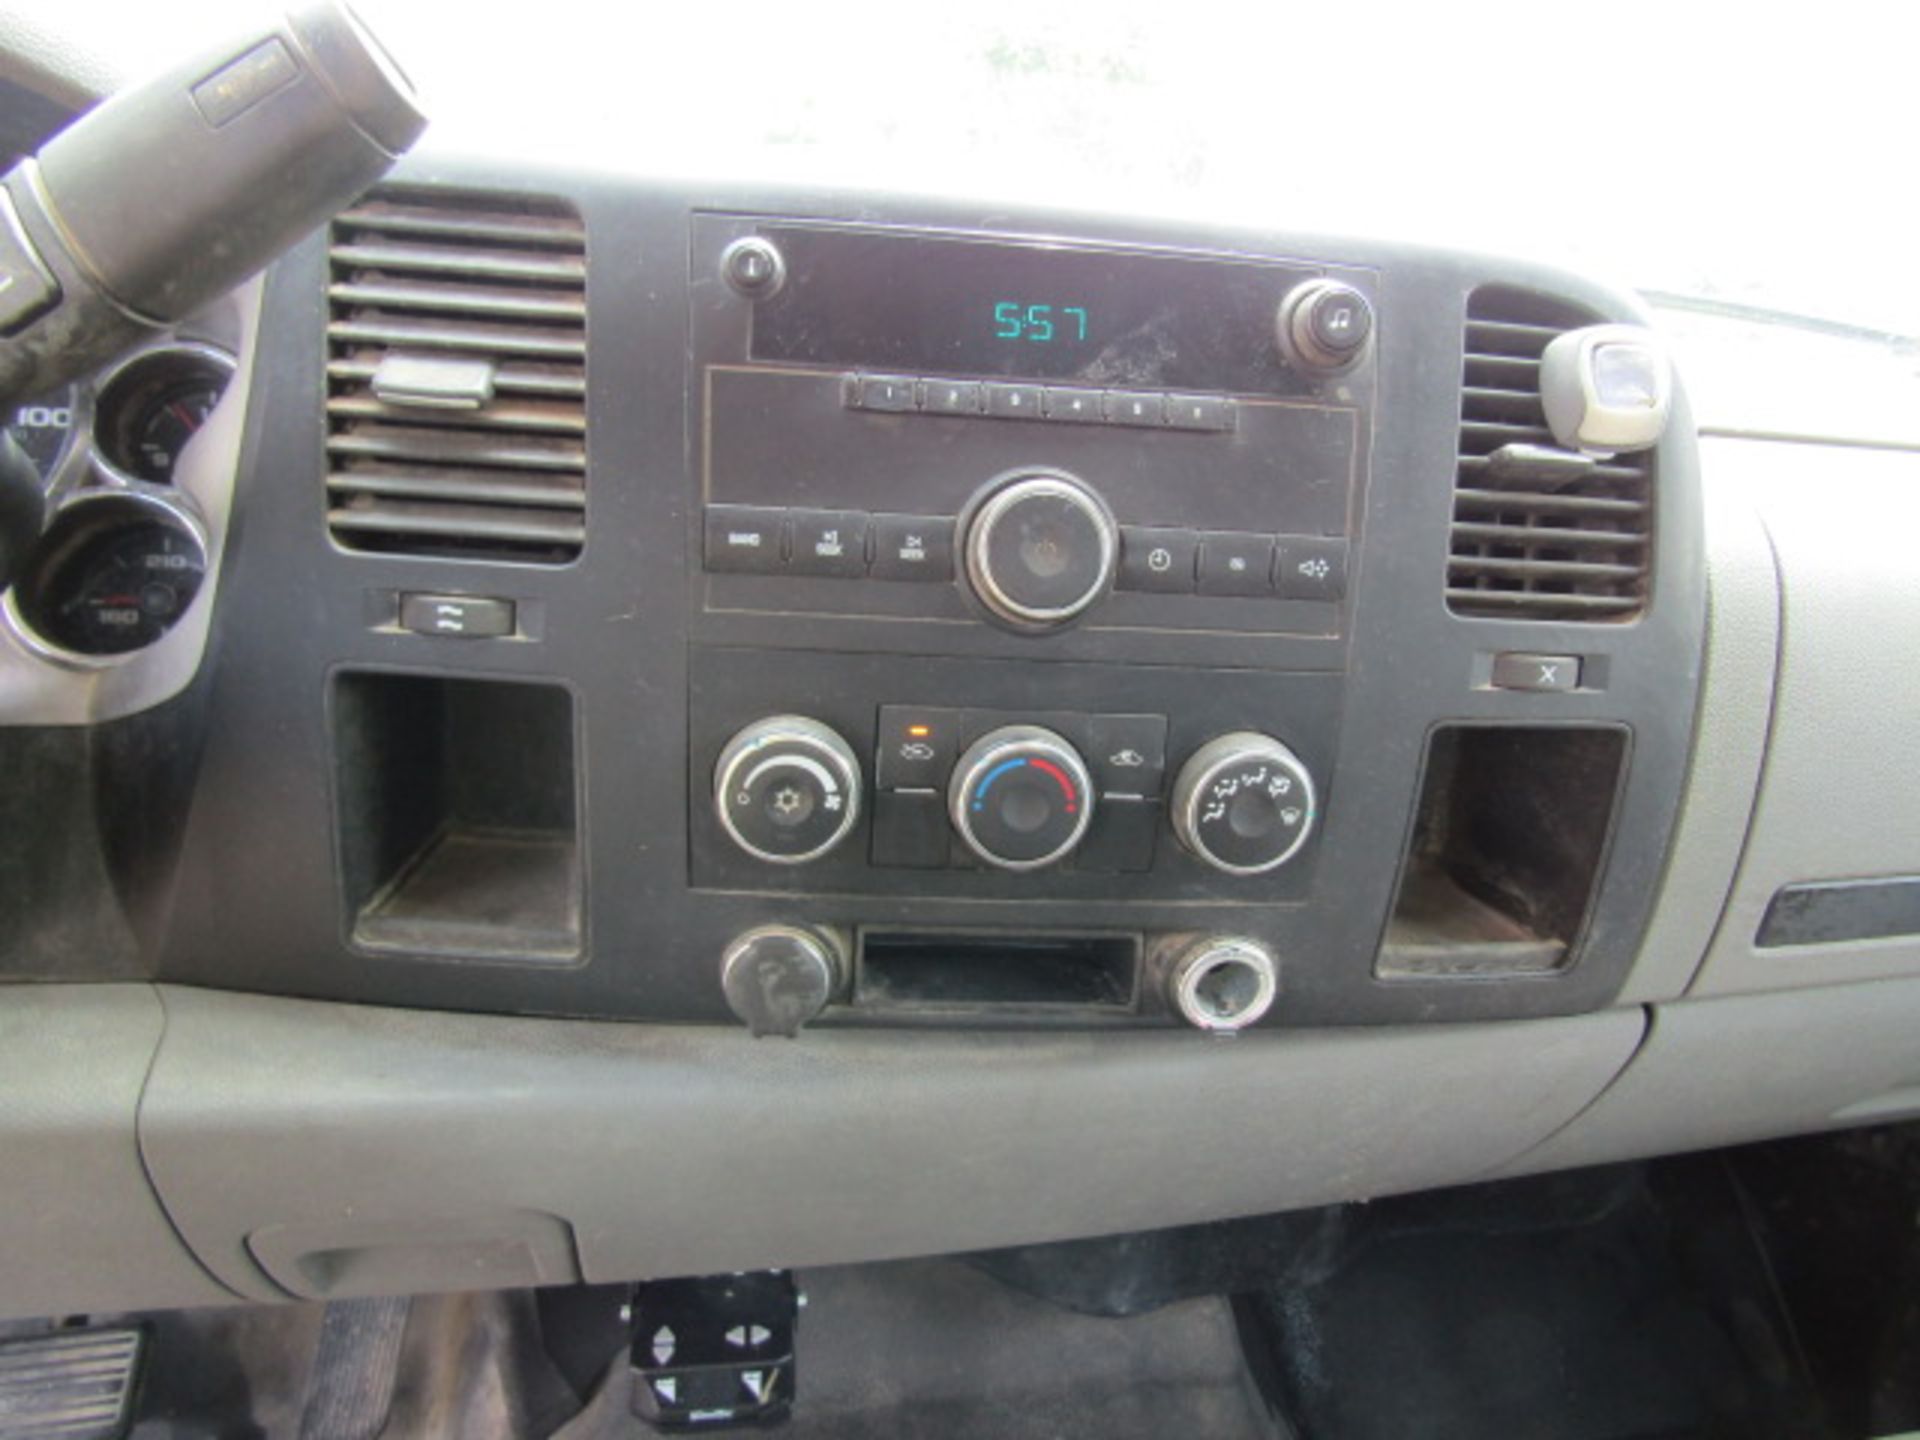 2007 GMC Sierra C3500 Crew Cab Utility Truck, VIN #1GTHC39K07E596191, 113747 miles, Automatic - Image 10 of 27